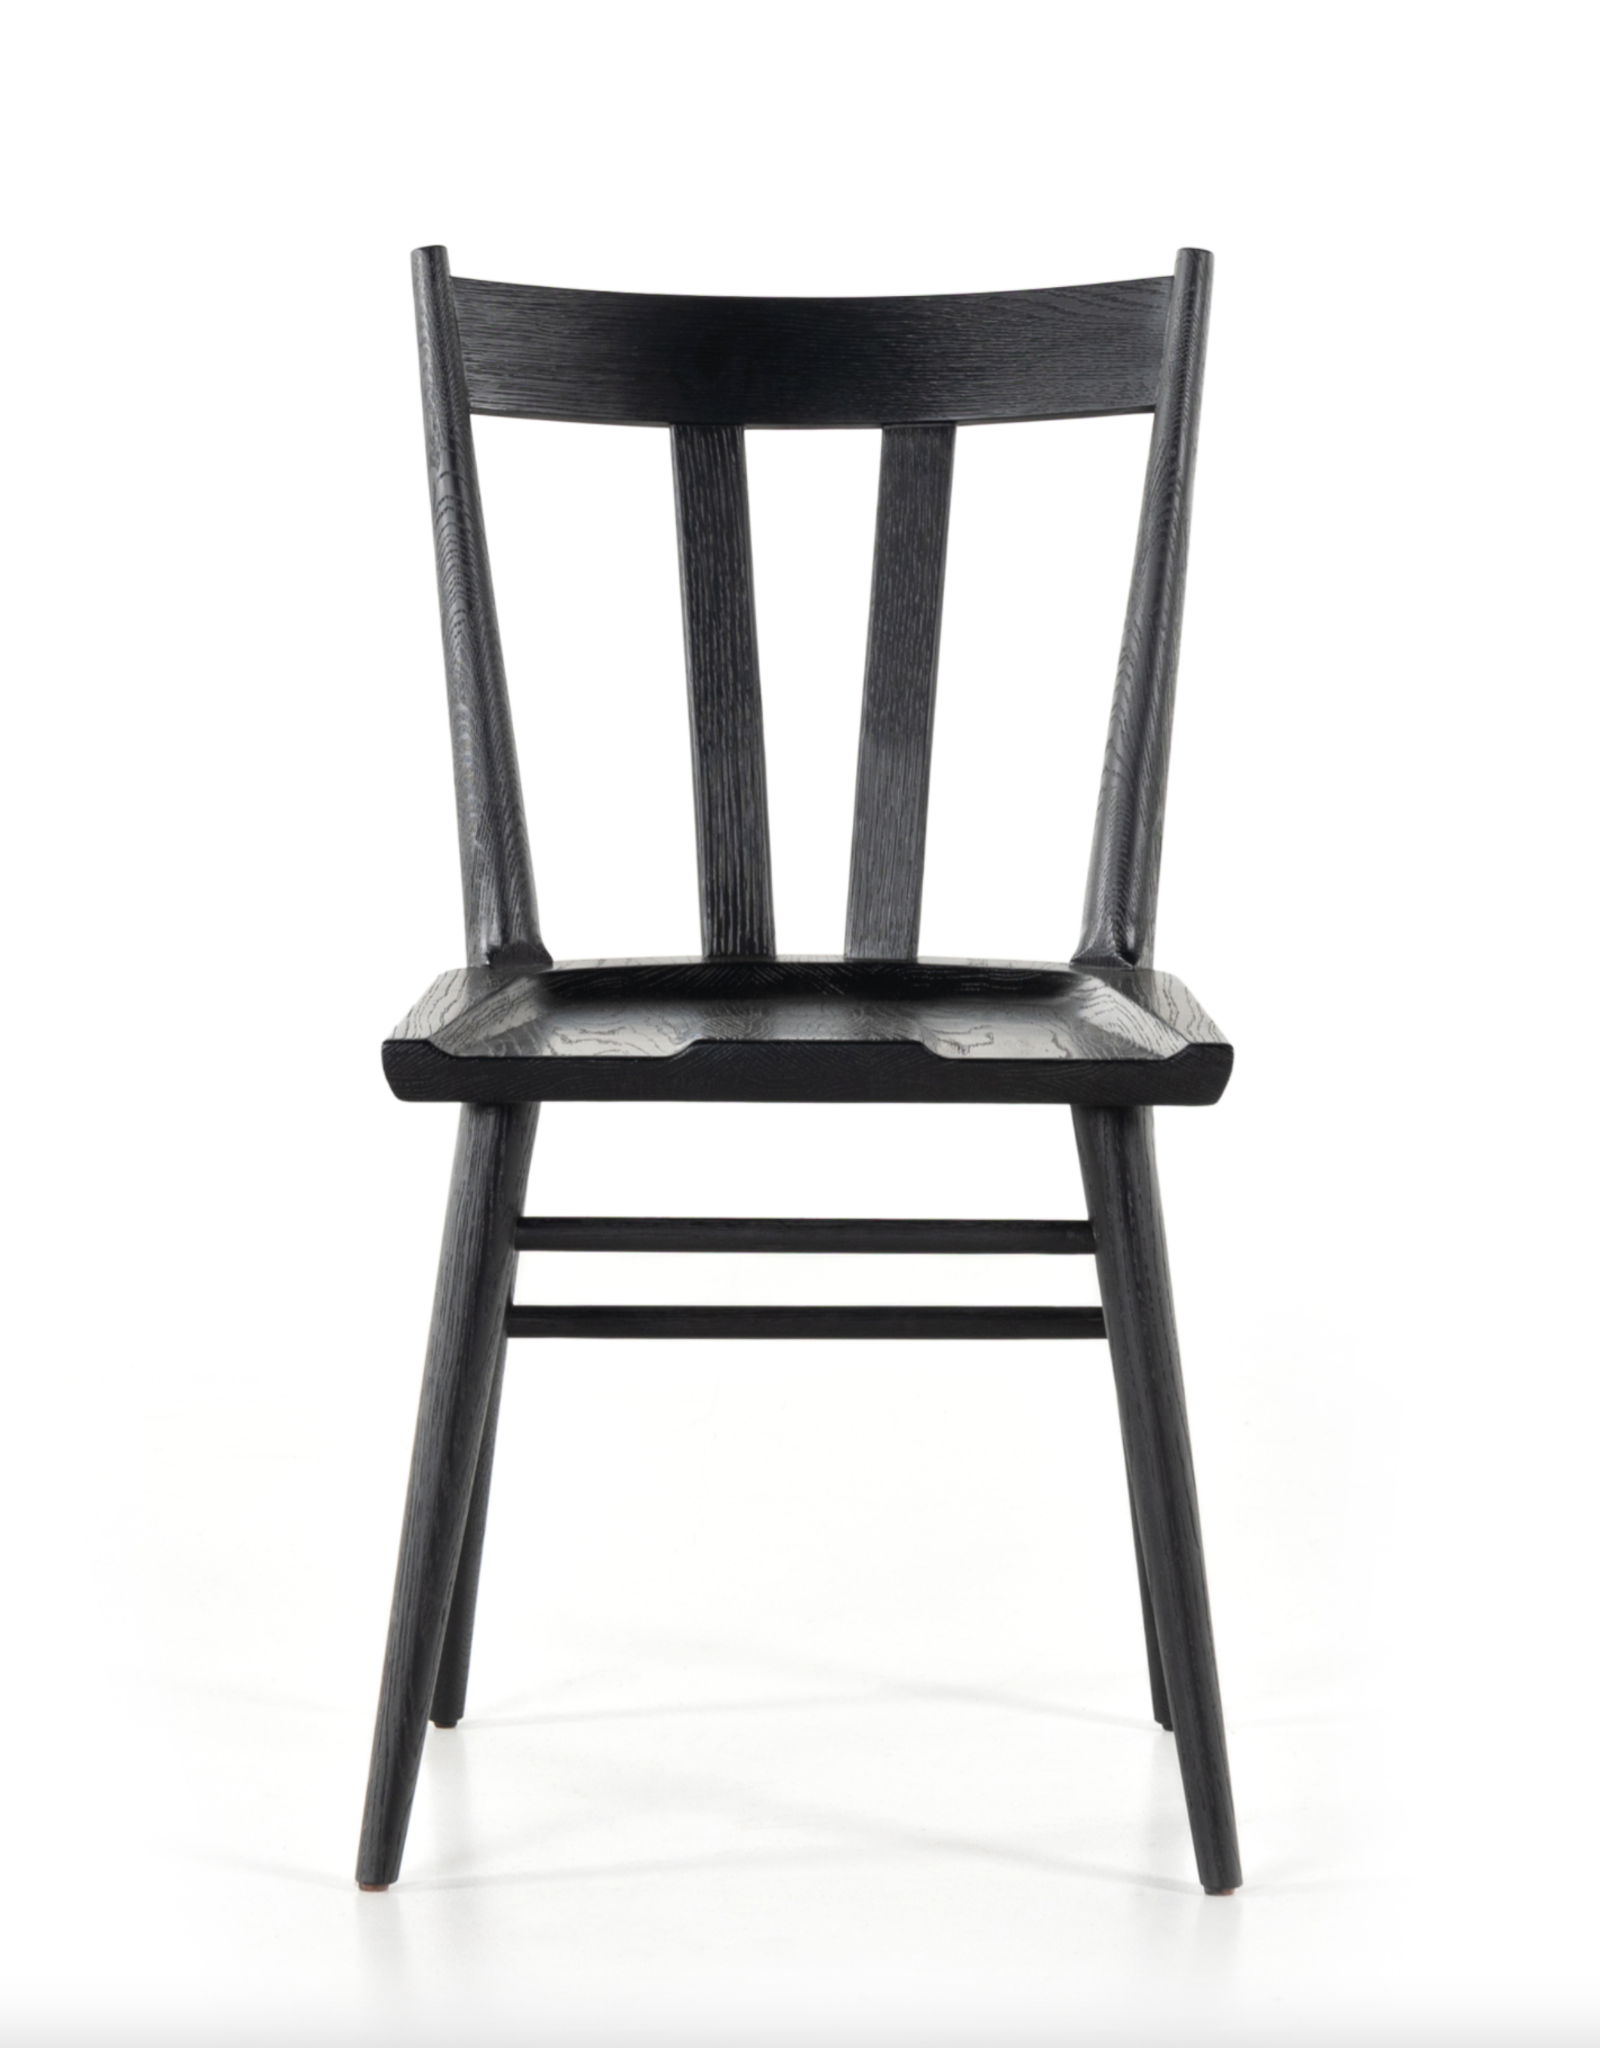 Gregory Dining Chair in Black Oak